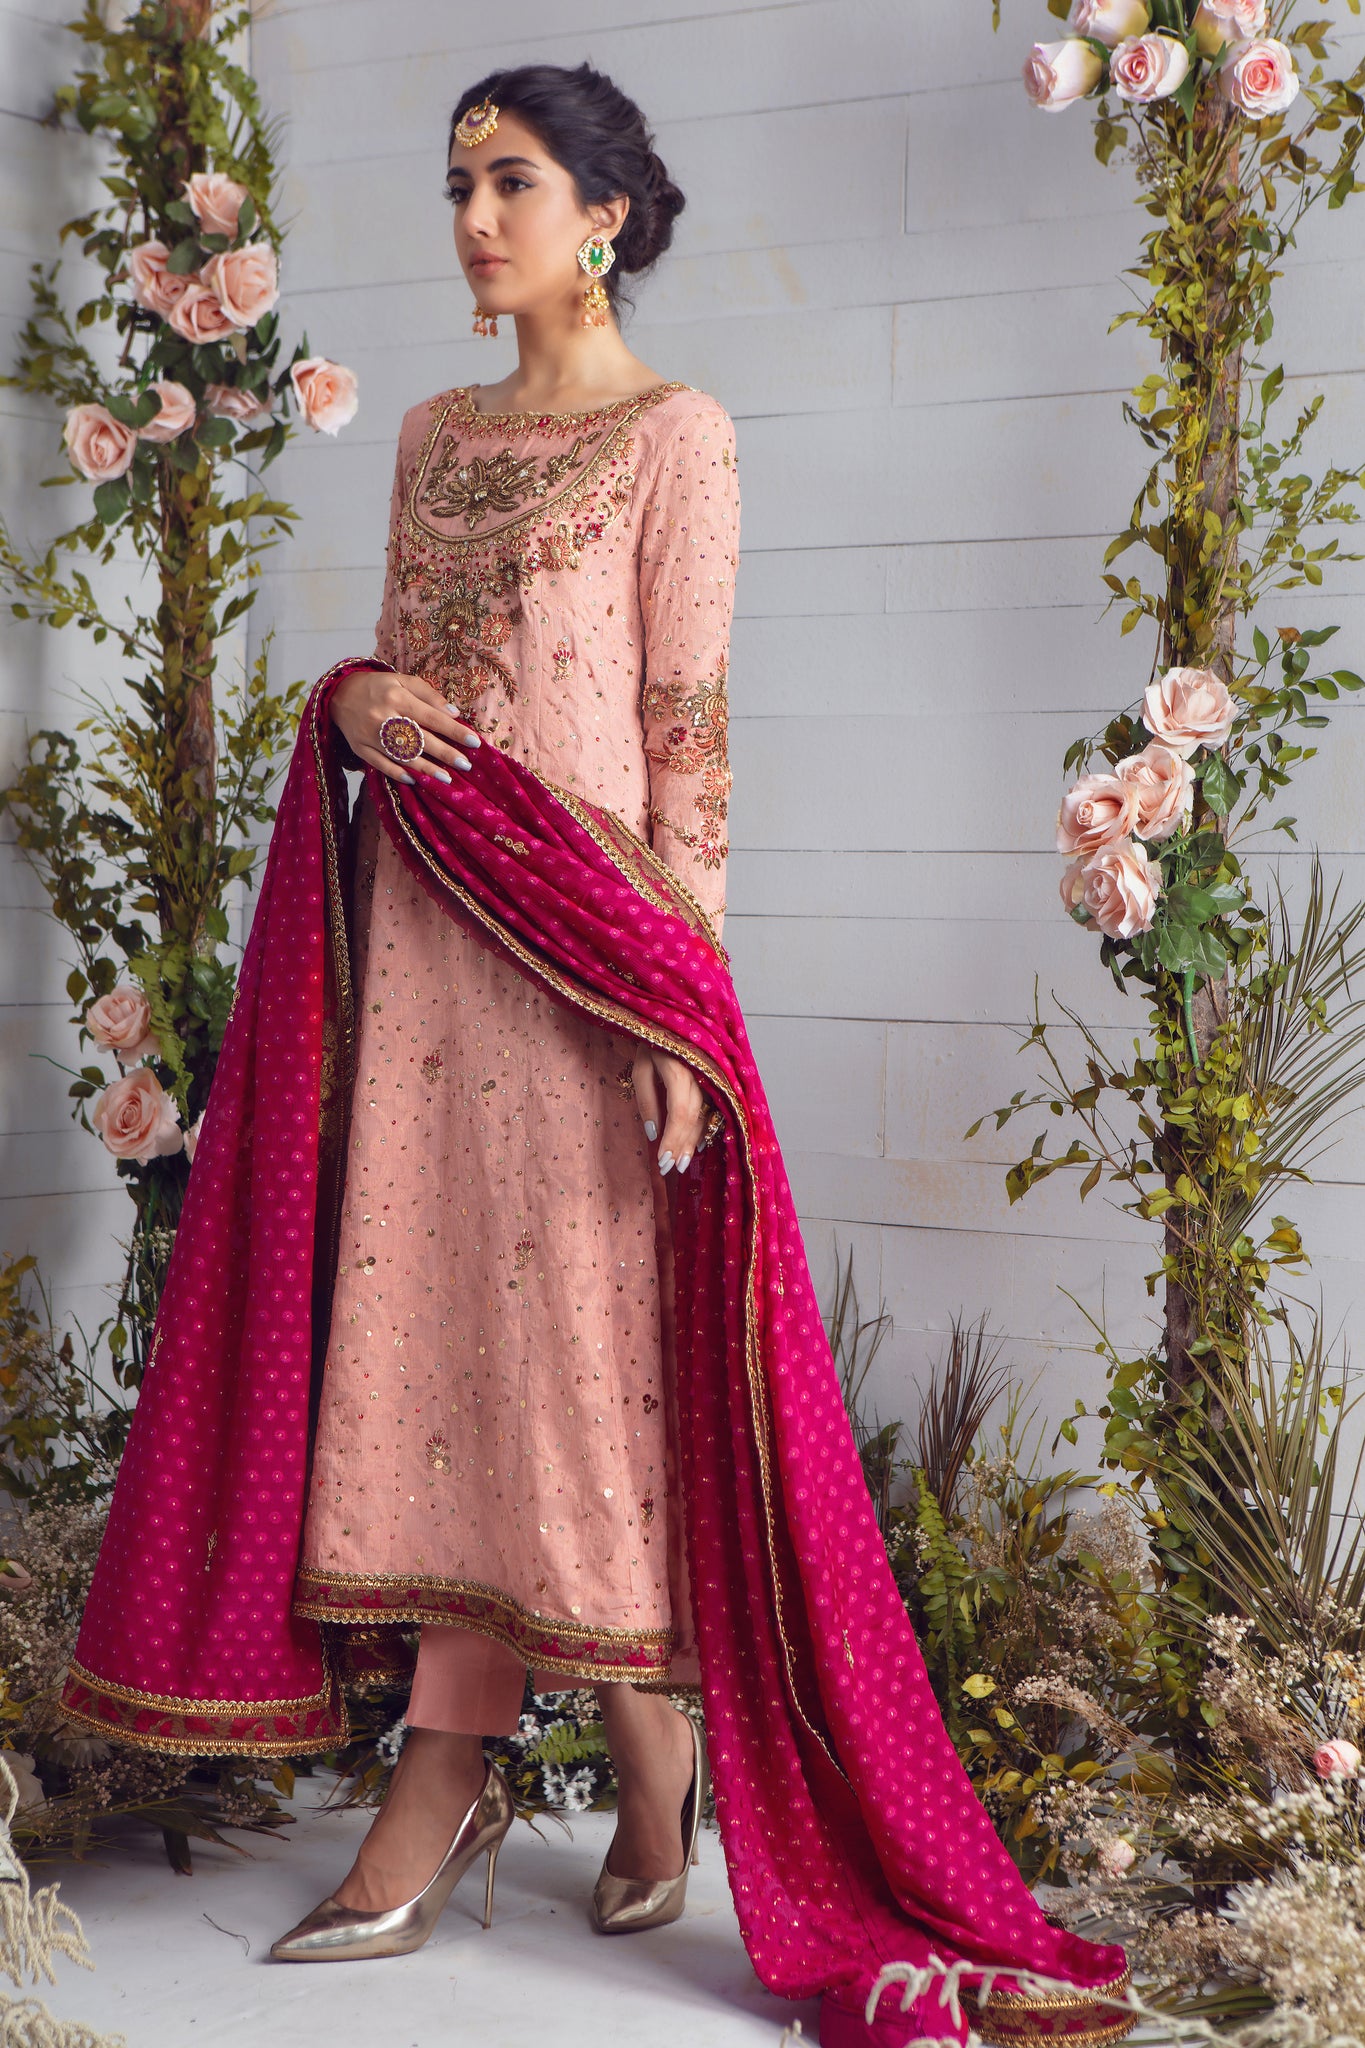 Meral | Pakistani Designer Outfit | Sarosh Salman